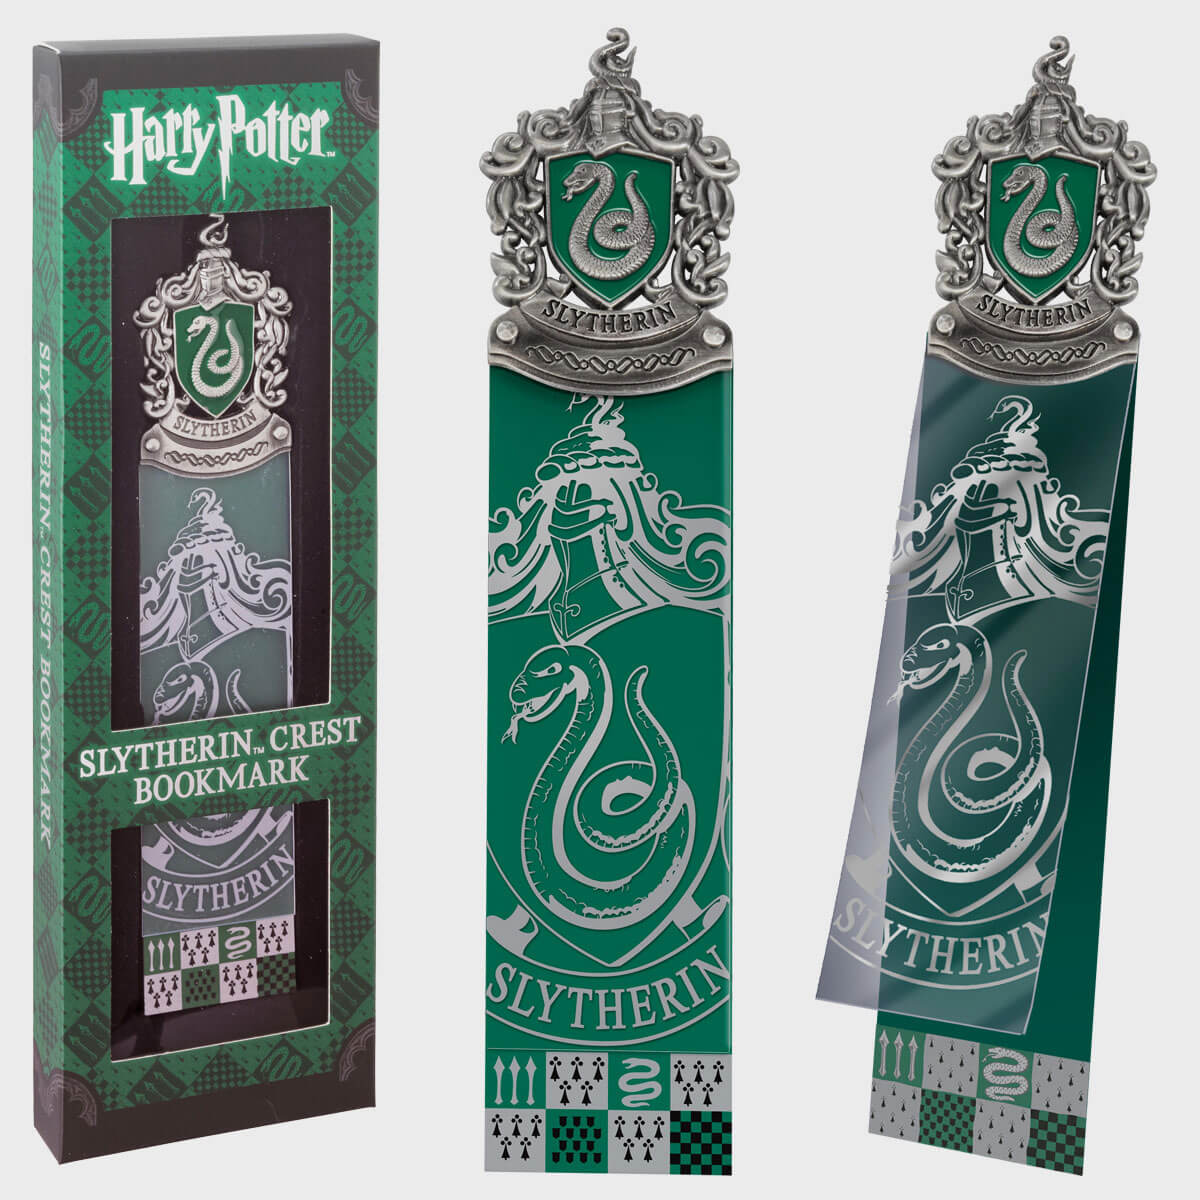 Harry Potter Slytherin Bookmark